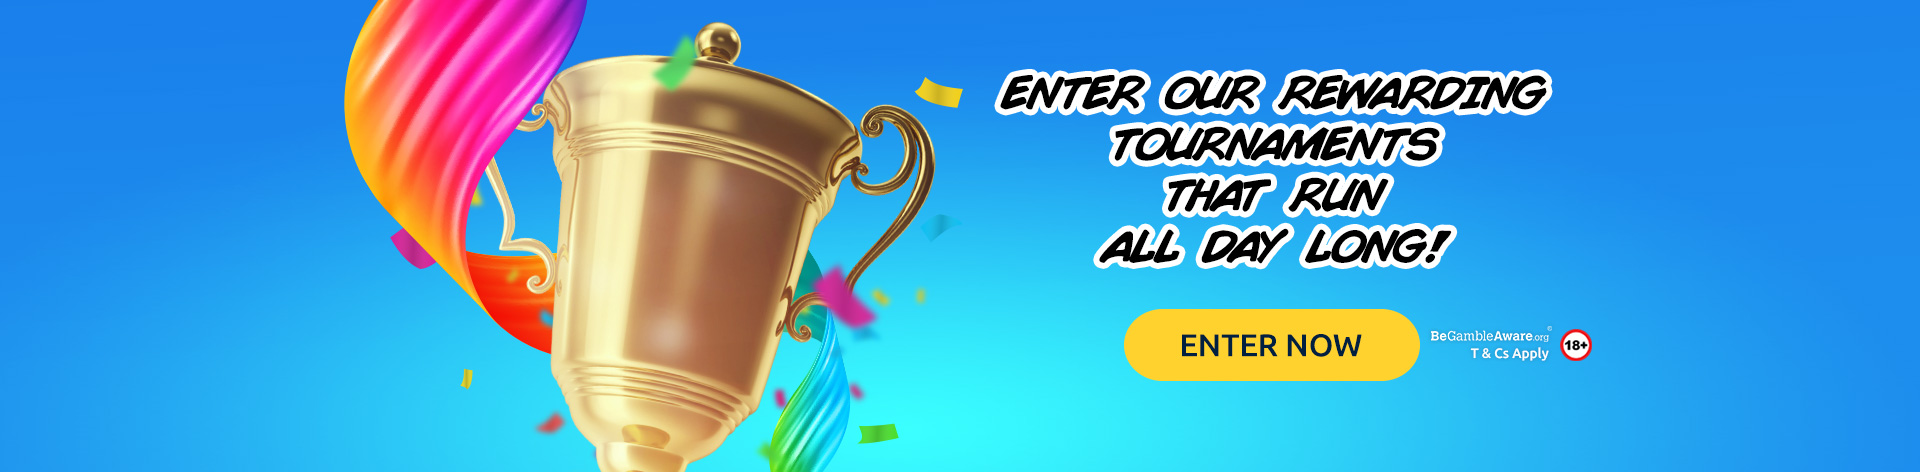 Enter our rewarding Tournaments that run all day long!